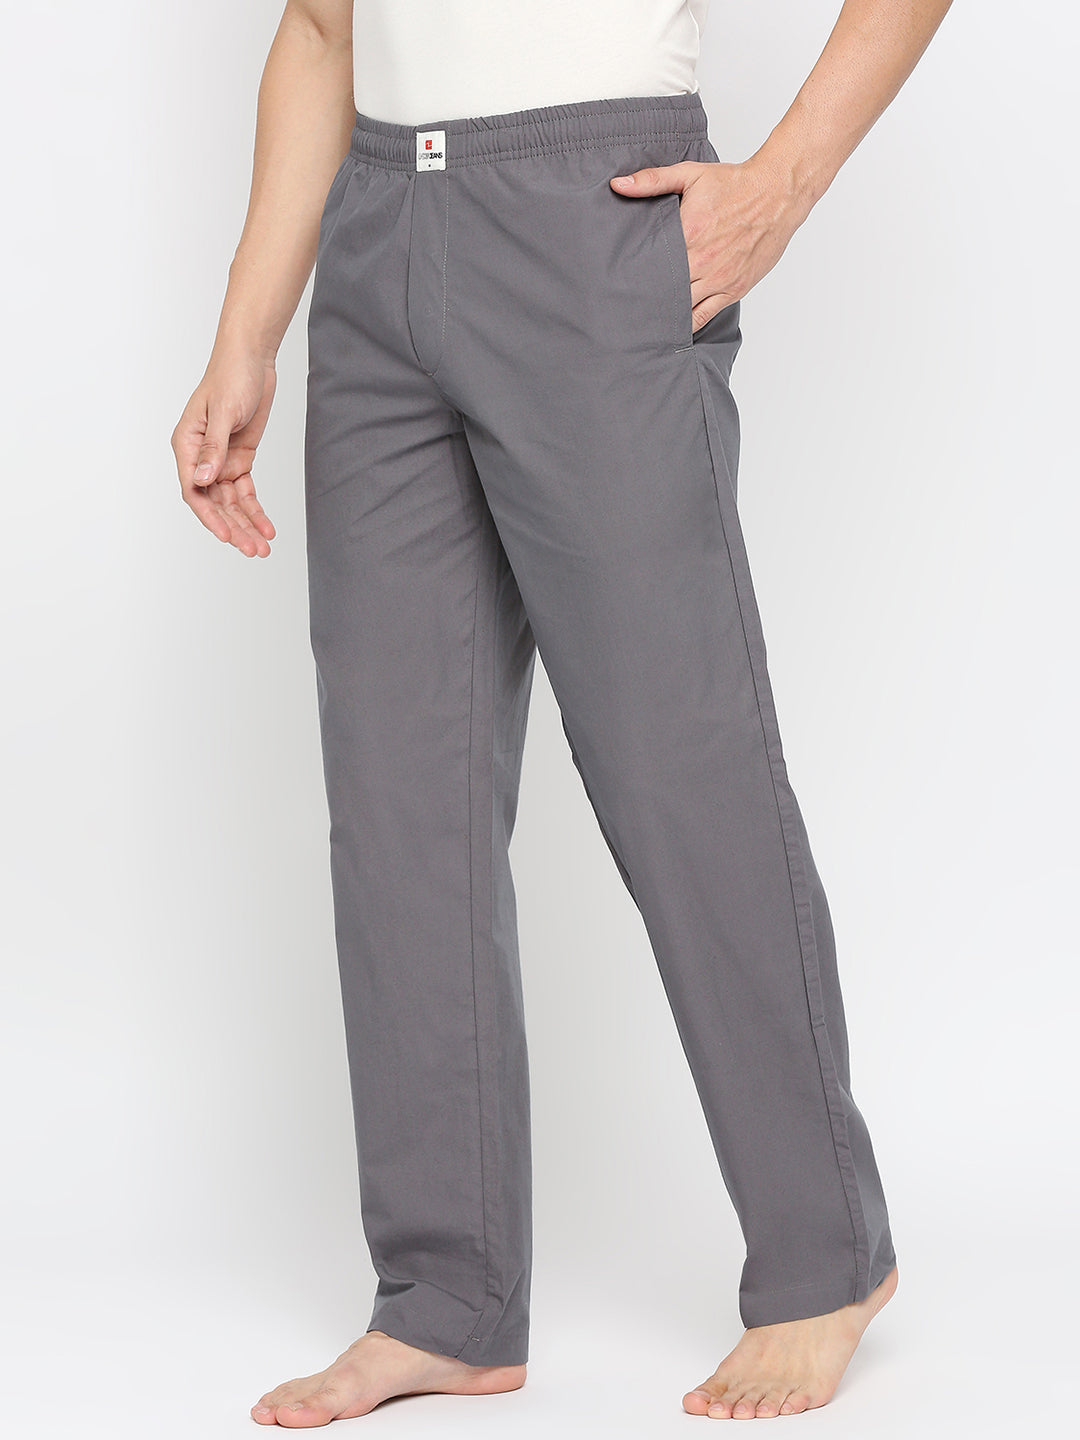 Men Premium Dark Grey Cotton Printed Pyjama - UnderJeans by Spykar